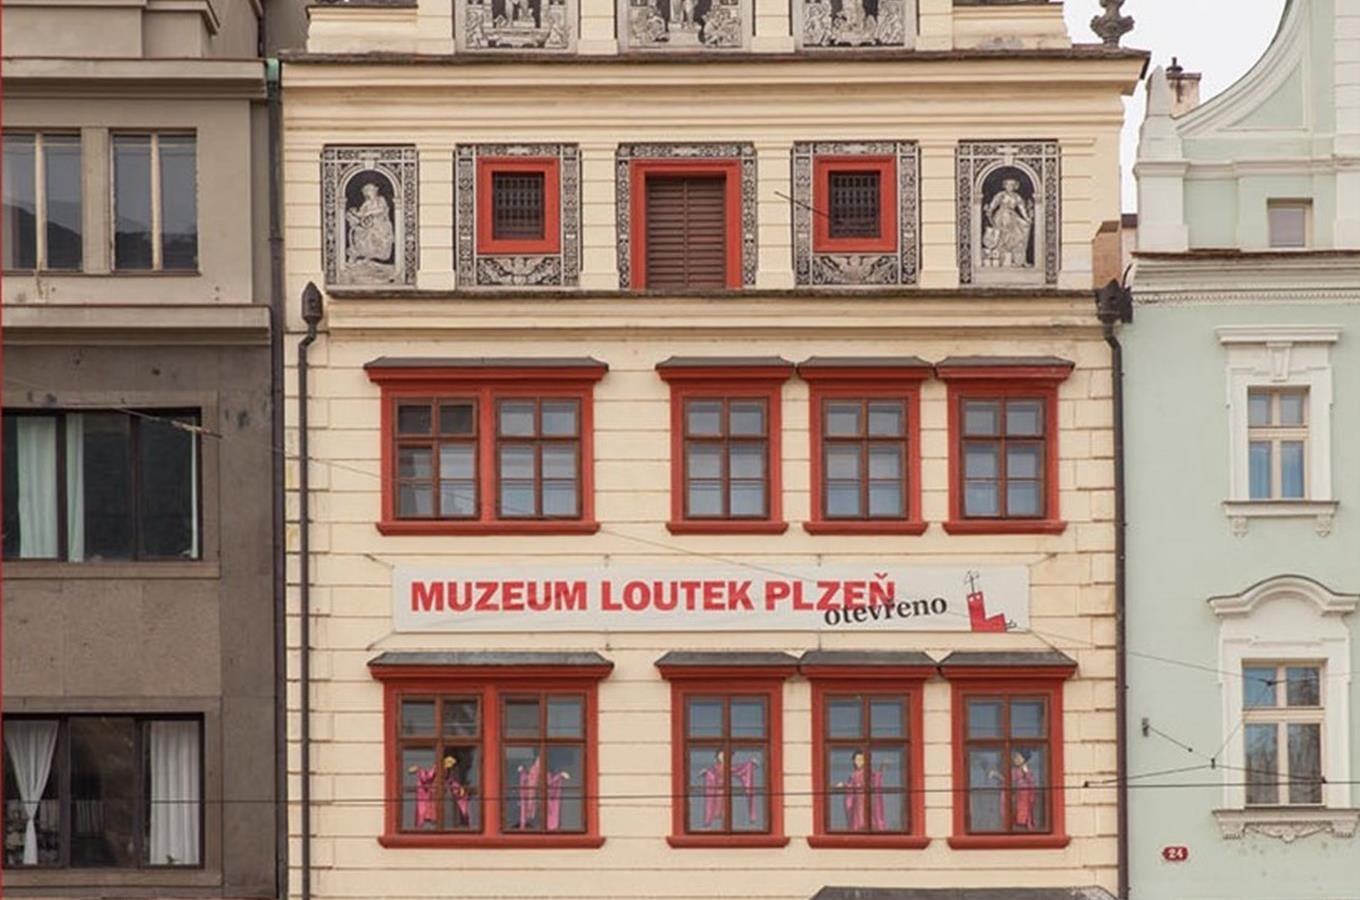 Muzeum loutek v Plzni